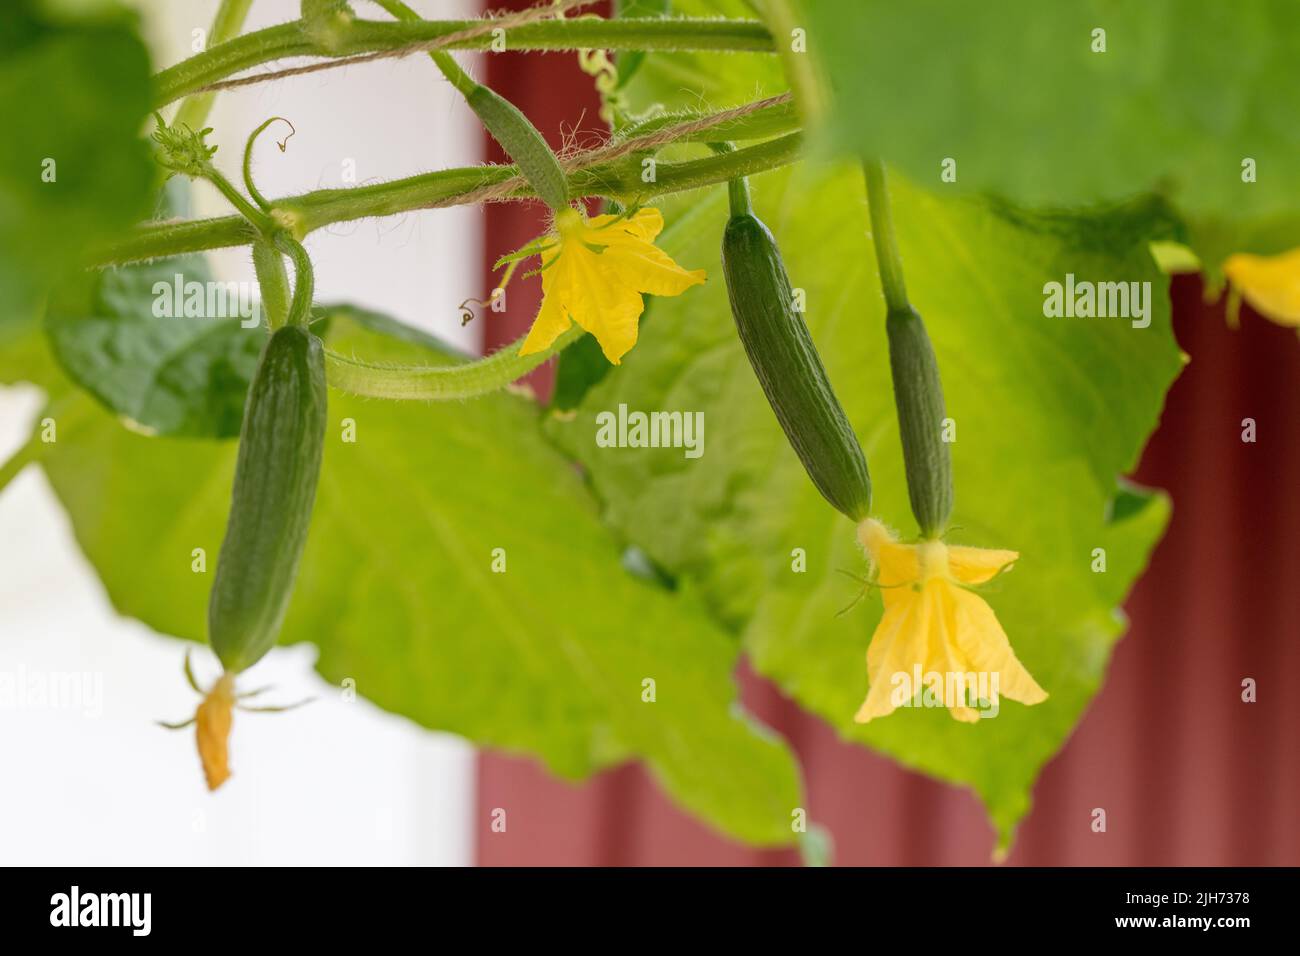 'Green Fingers F1' Cucumber, Gurka (Cucumis sativus) Stock Photo